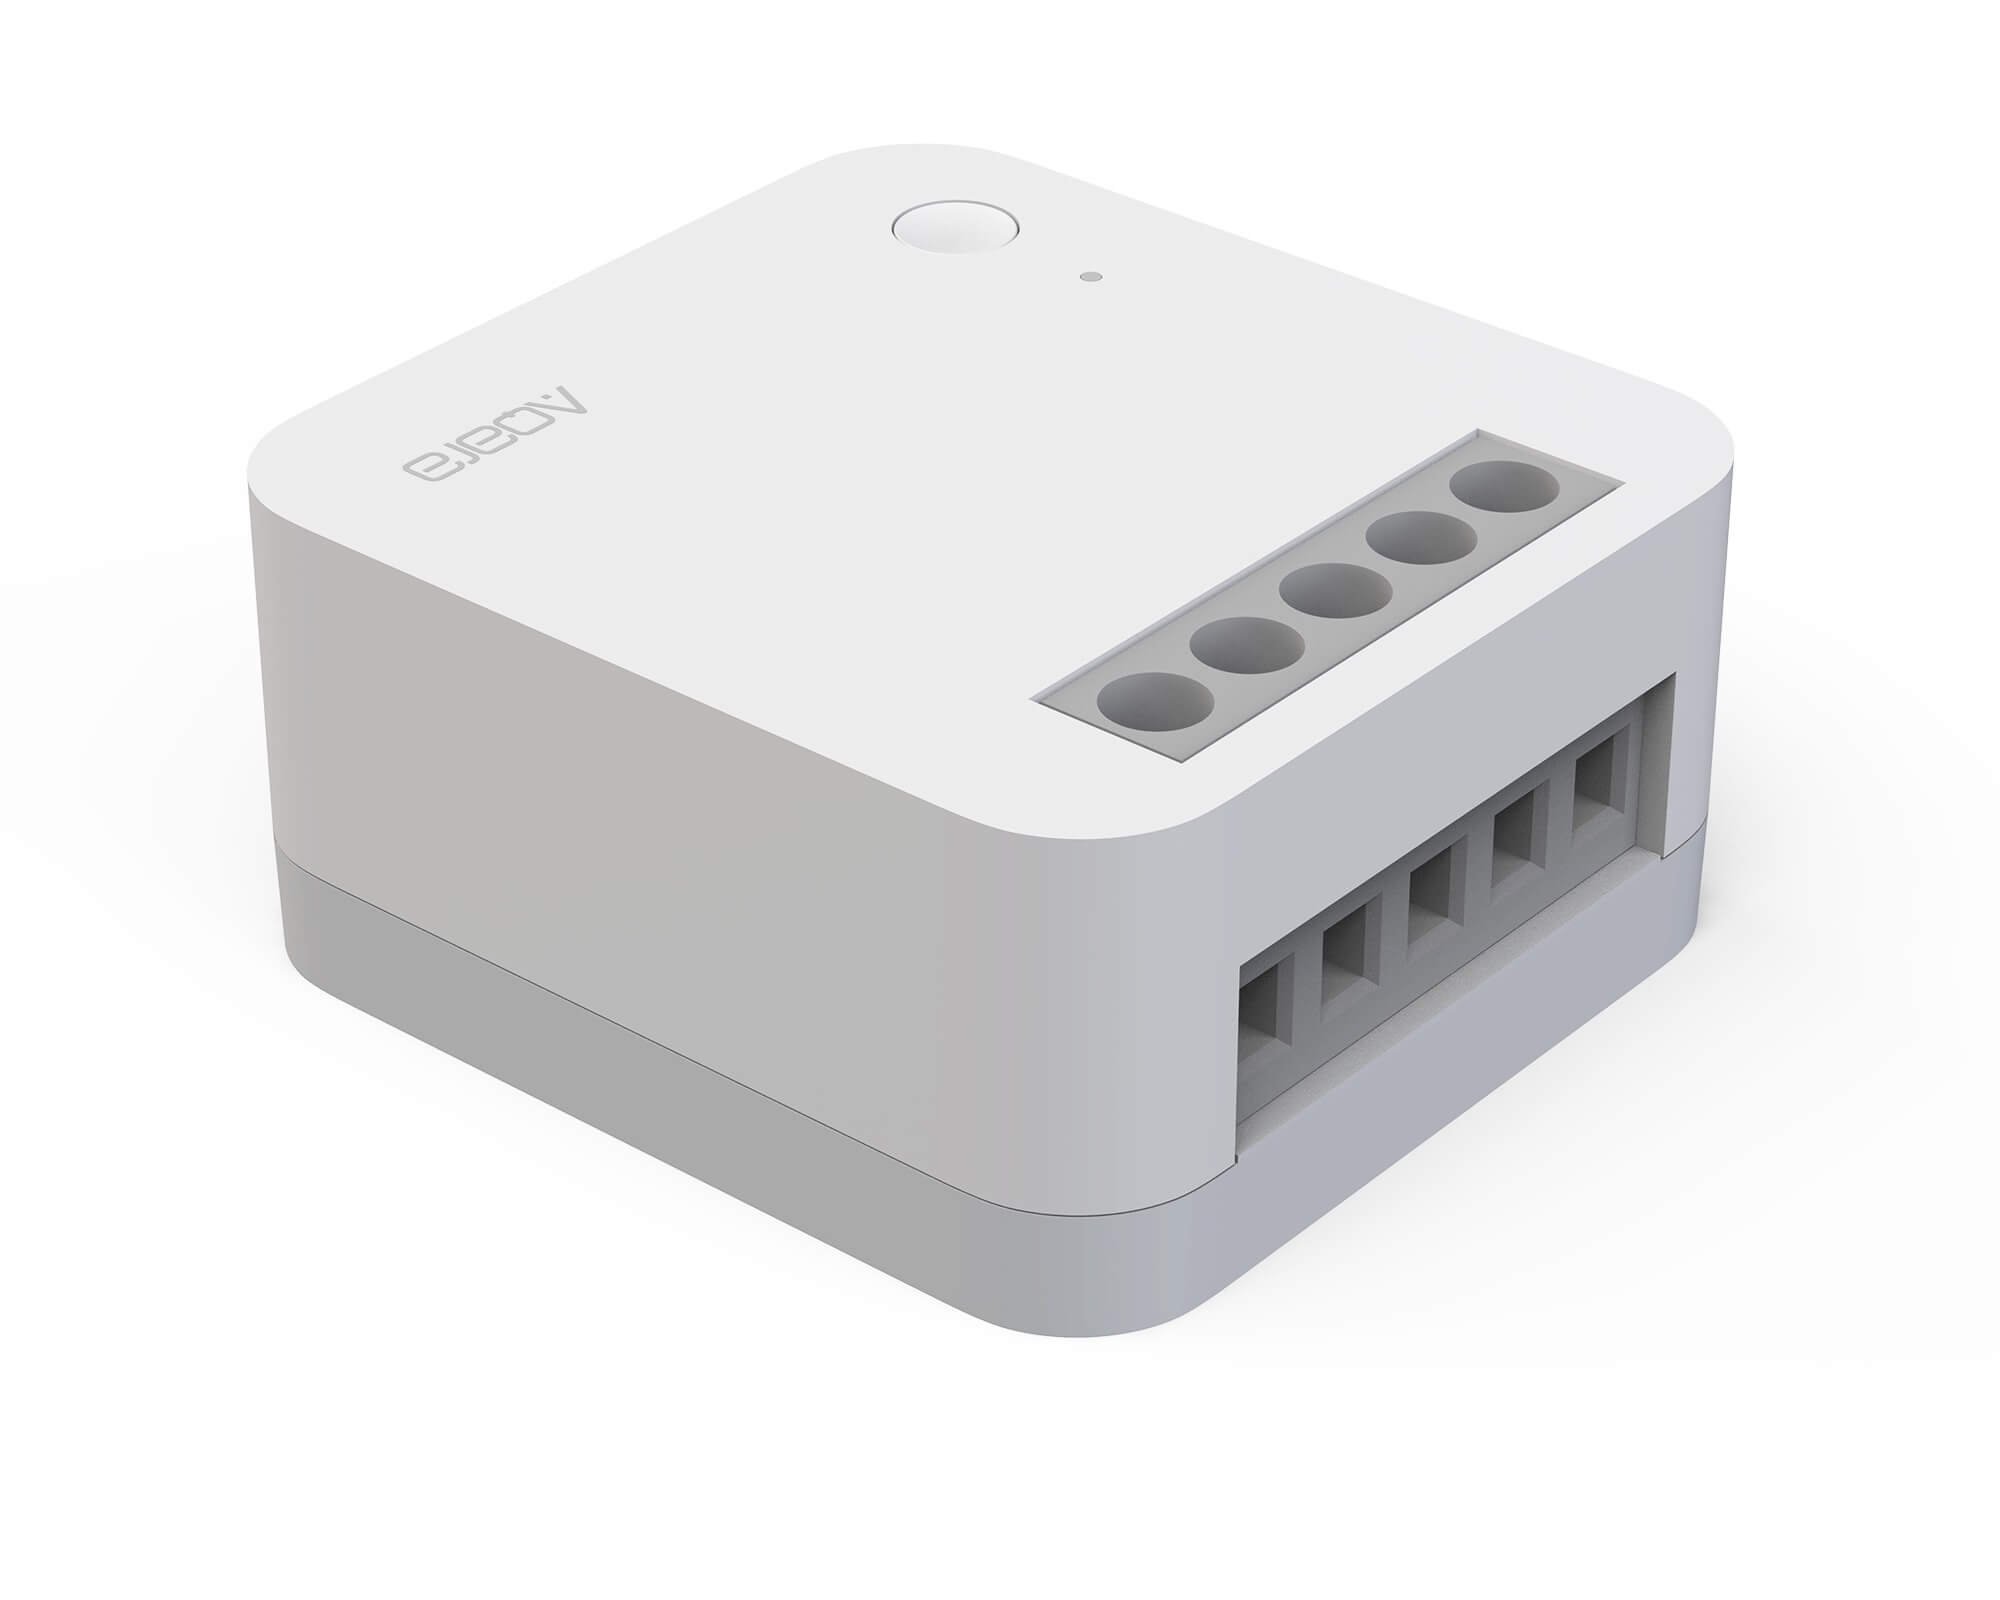 Aqara Smart Hub E1 Plus 3 Aqara Temperature and Humidity Sensor, Zigbee,  for Remote Monitoring and Home Automation, Compatible with Apple HomeKit